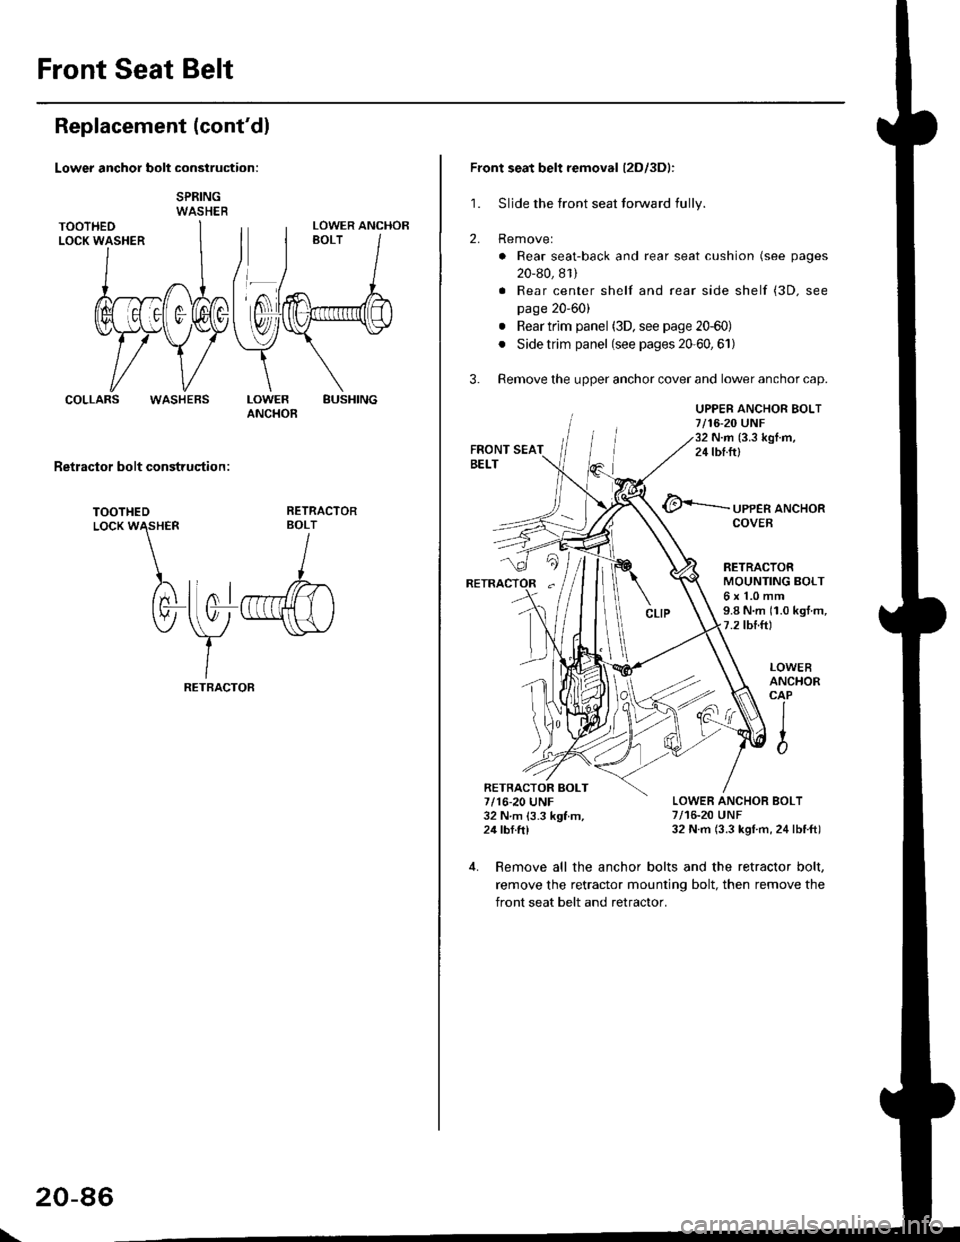 HONDA CIVIC 1996 6.G Workshop Manual Front Seat Belt
Replacement (contdl
Lower anchor bolt construction:
SPRINGWASHER
COLLARSBUSHINGLOWERANCHOB
Retractor bolt construqtion :
TOOTHEDLocK W\HER
)rtnl
tv-
RETRACTORBOLT
I
llo1r",ffi)
\y 
-"